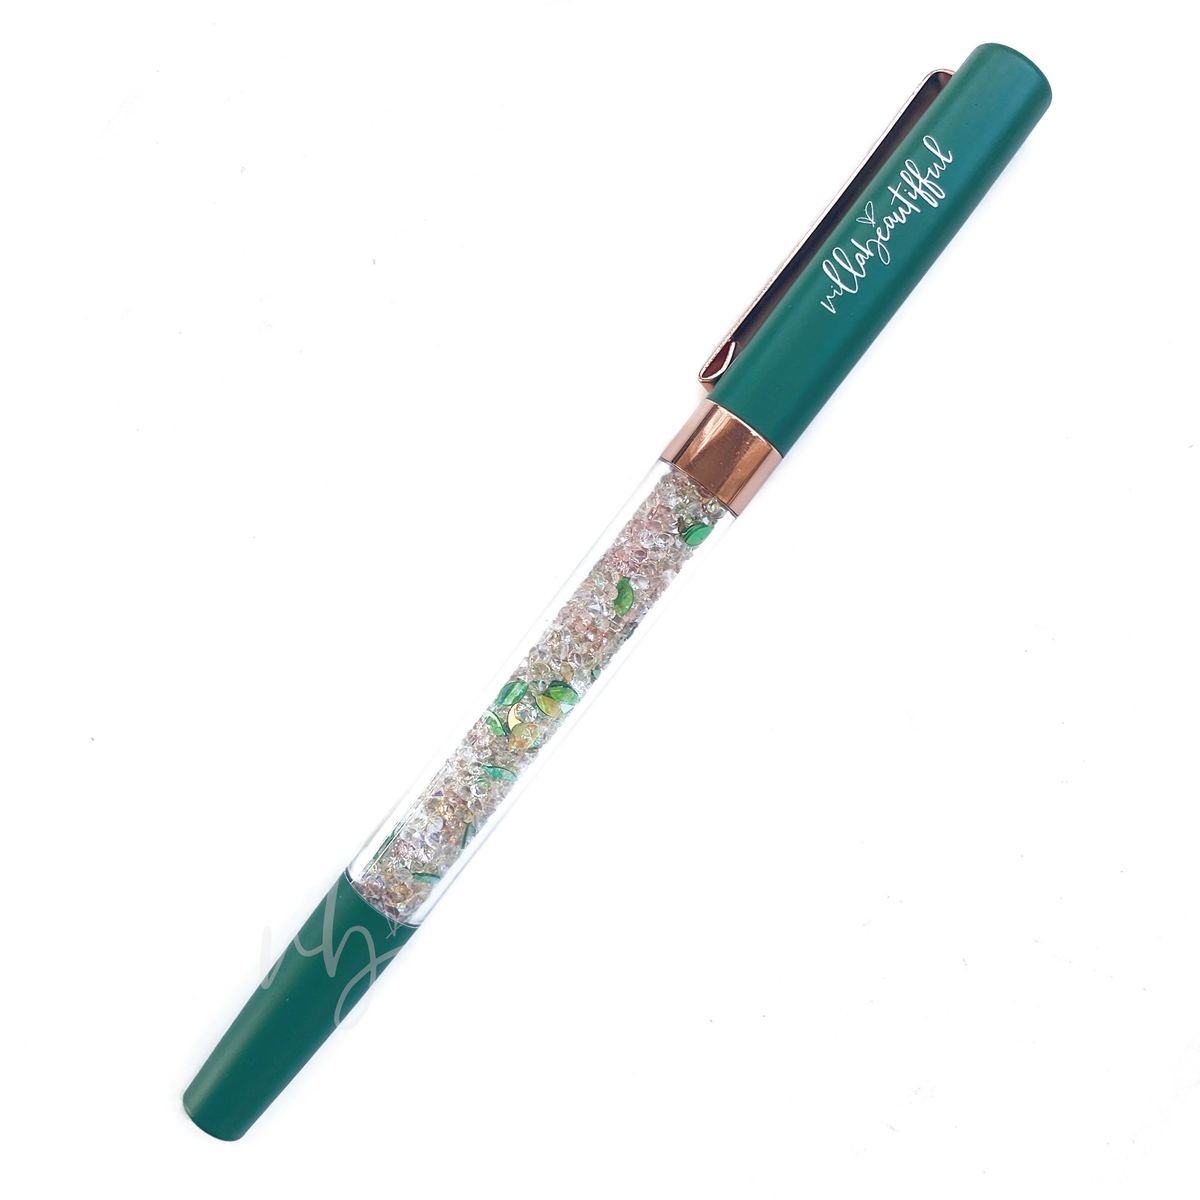 Plant Mama Crystal VBPen | limited kit pen